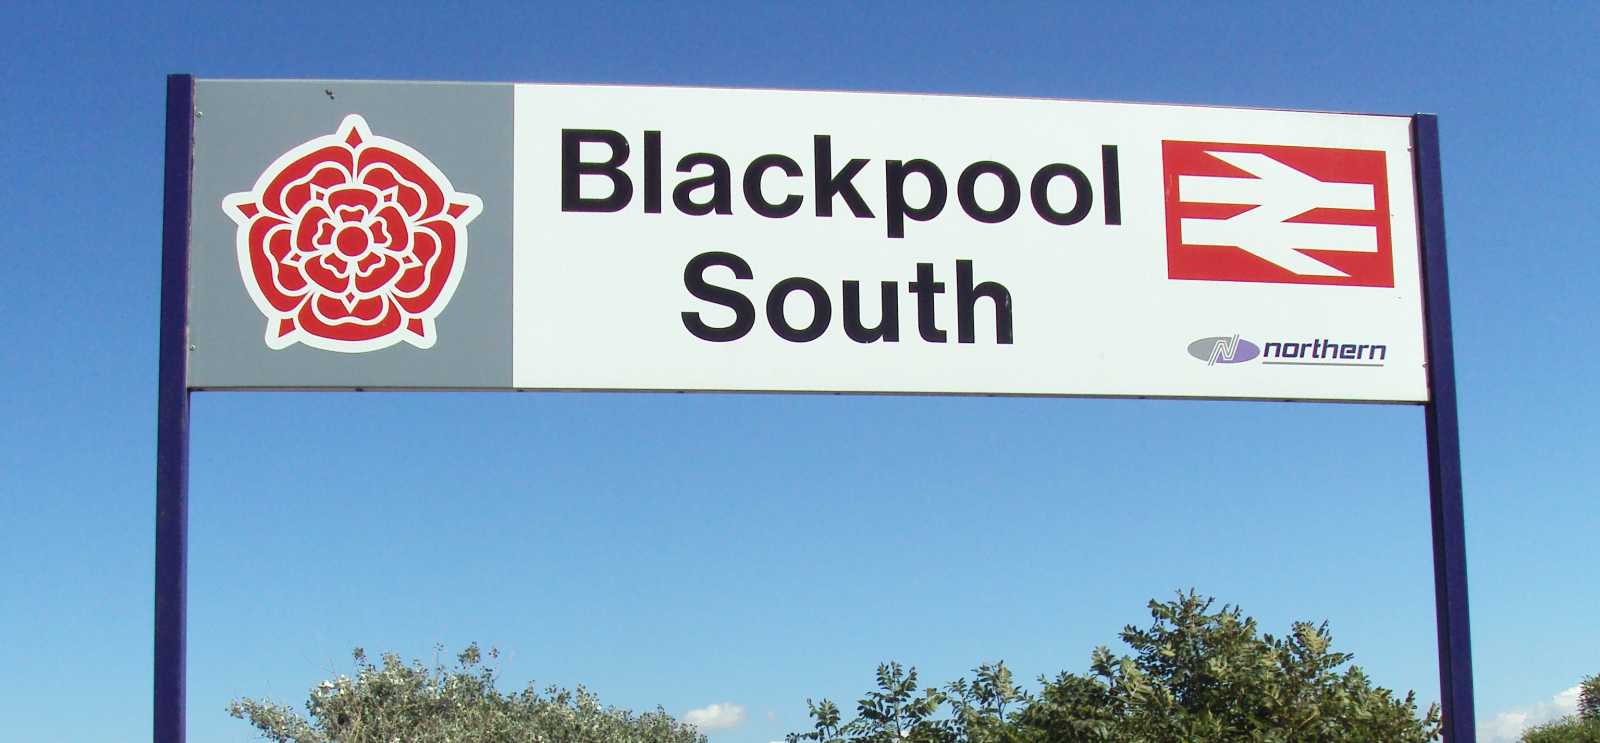 Blackpool South Railway Station, Electrification of the Blackpool Railway Line